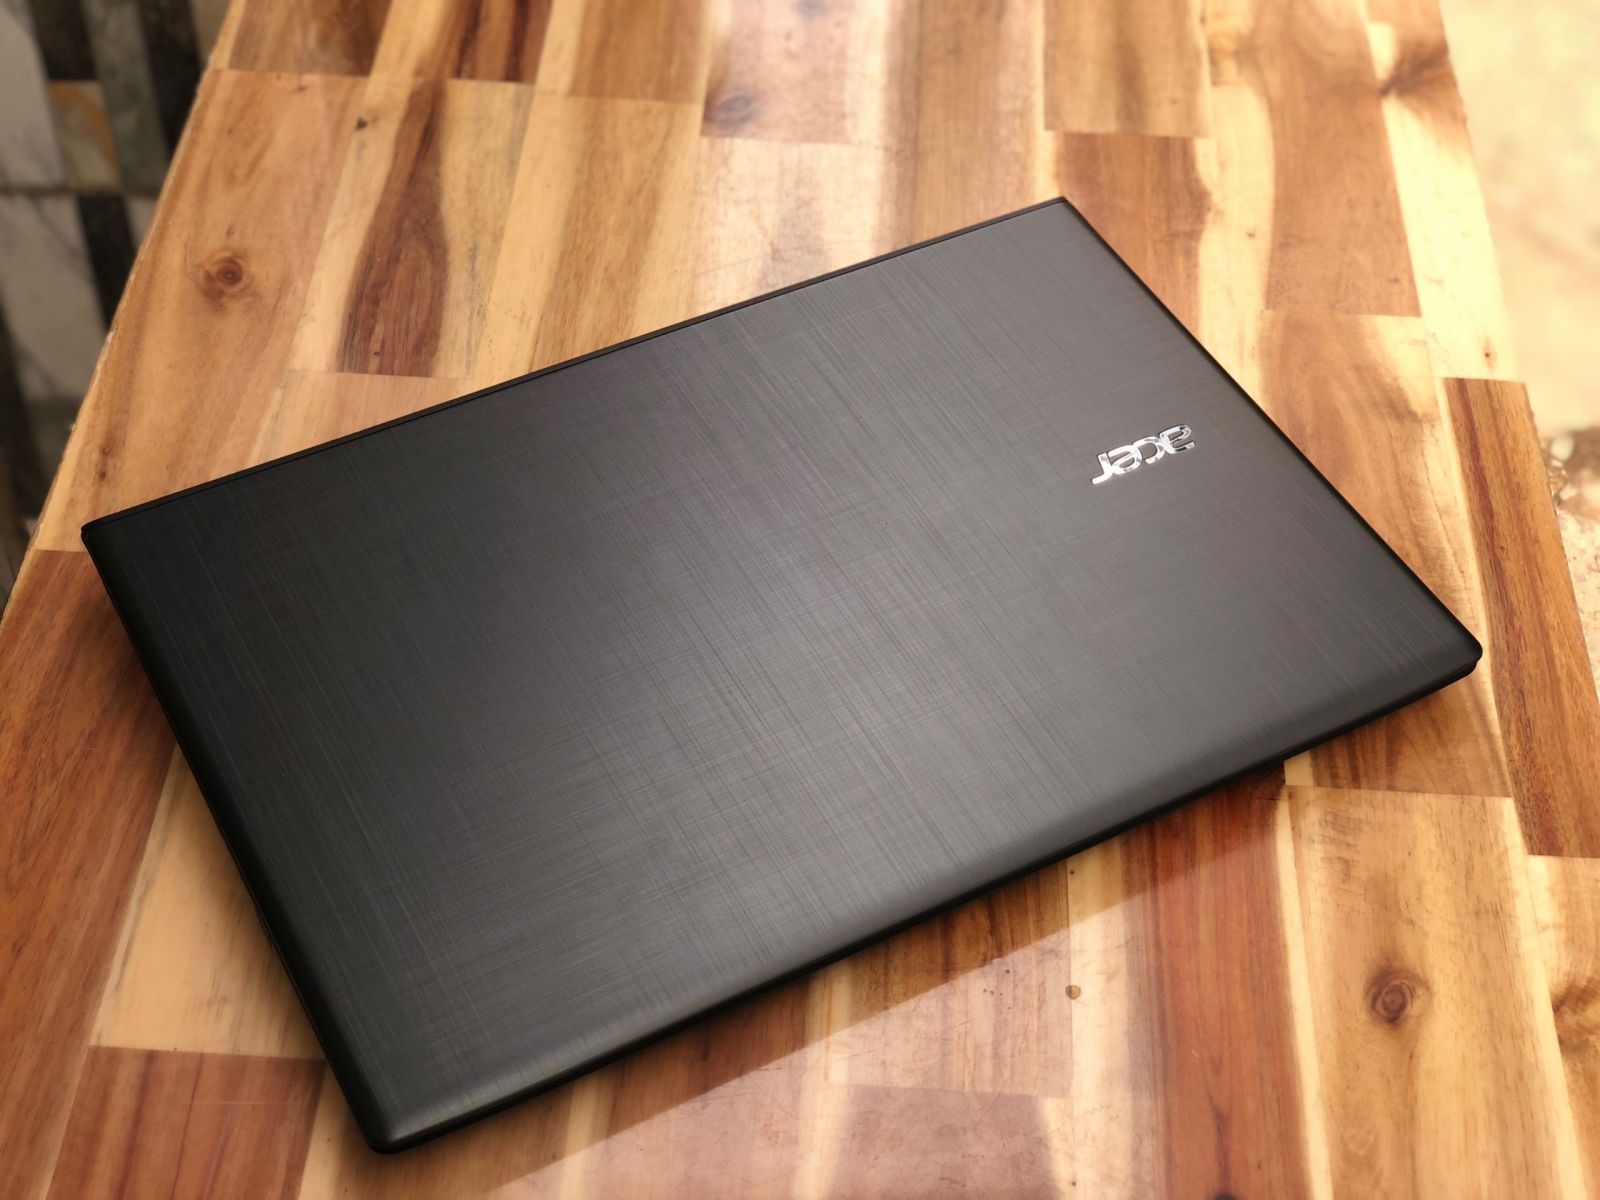 Laptop Acer E5-575G-39QW, i3 7100U 4G 500G Vga GT940MX Full HD Like new zin 100% Giá rẻ4